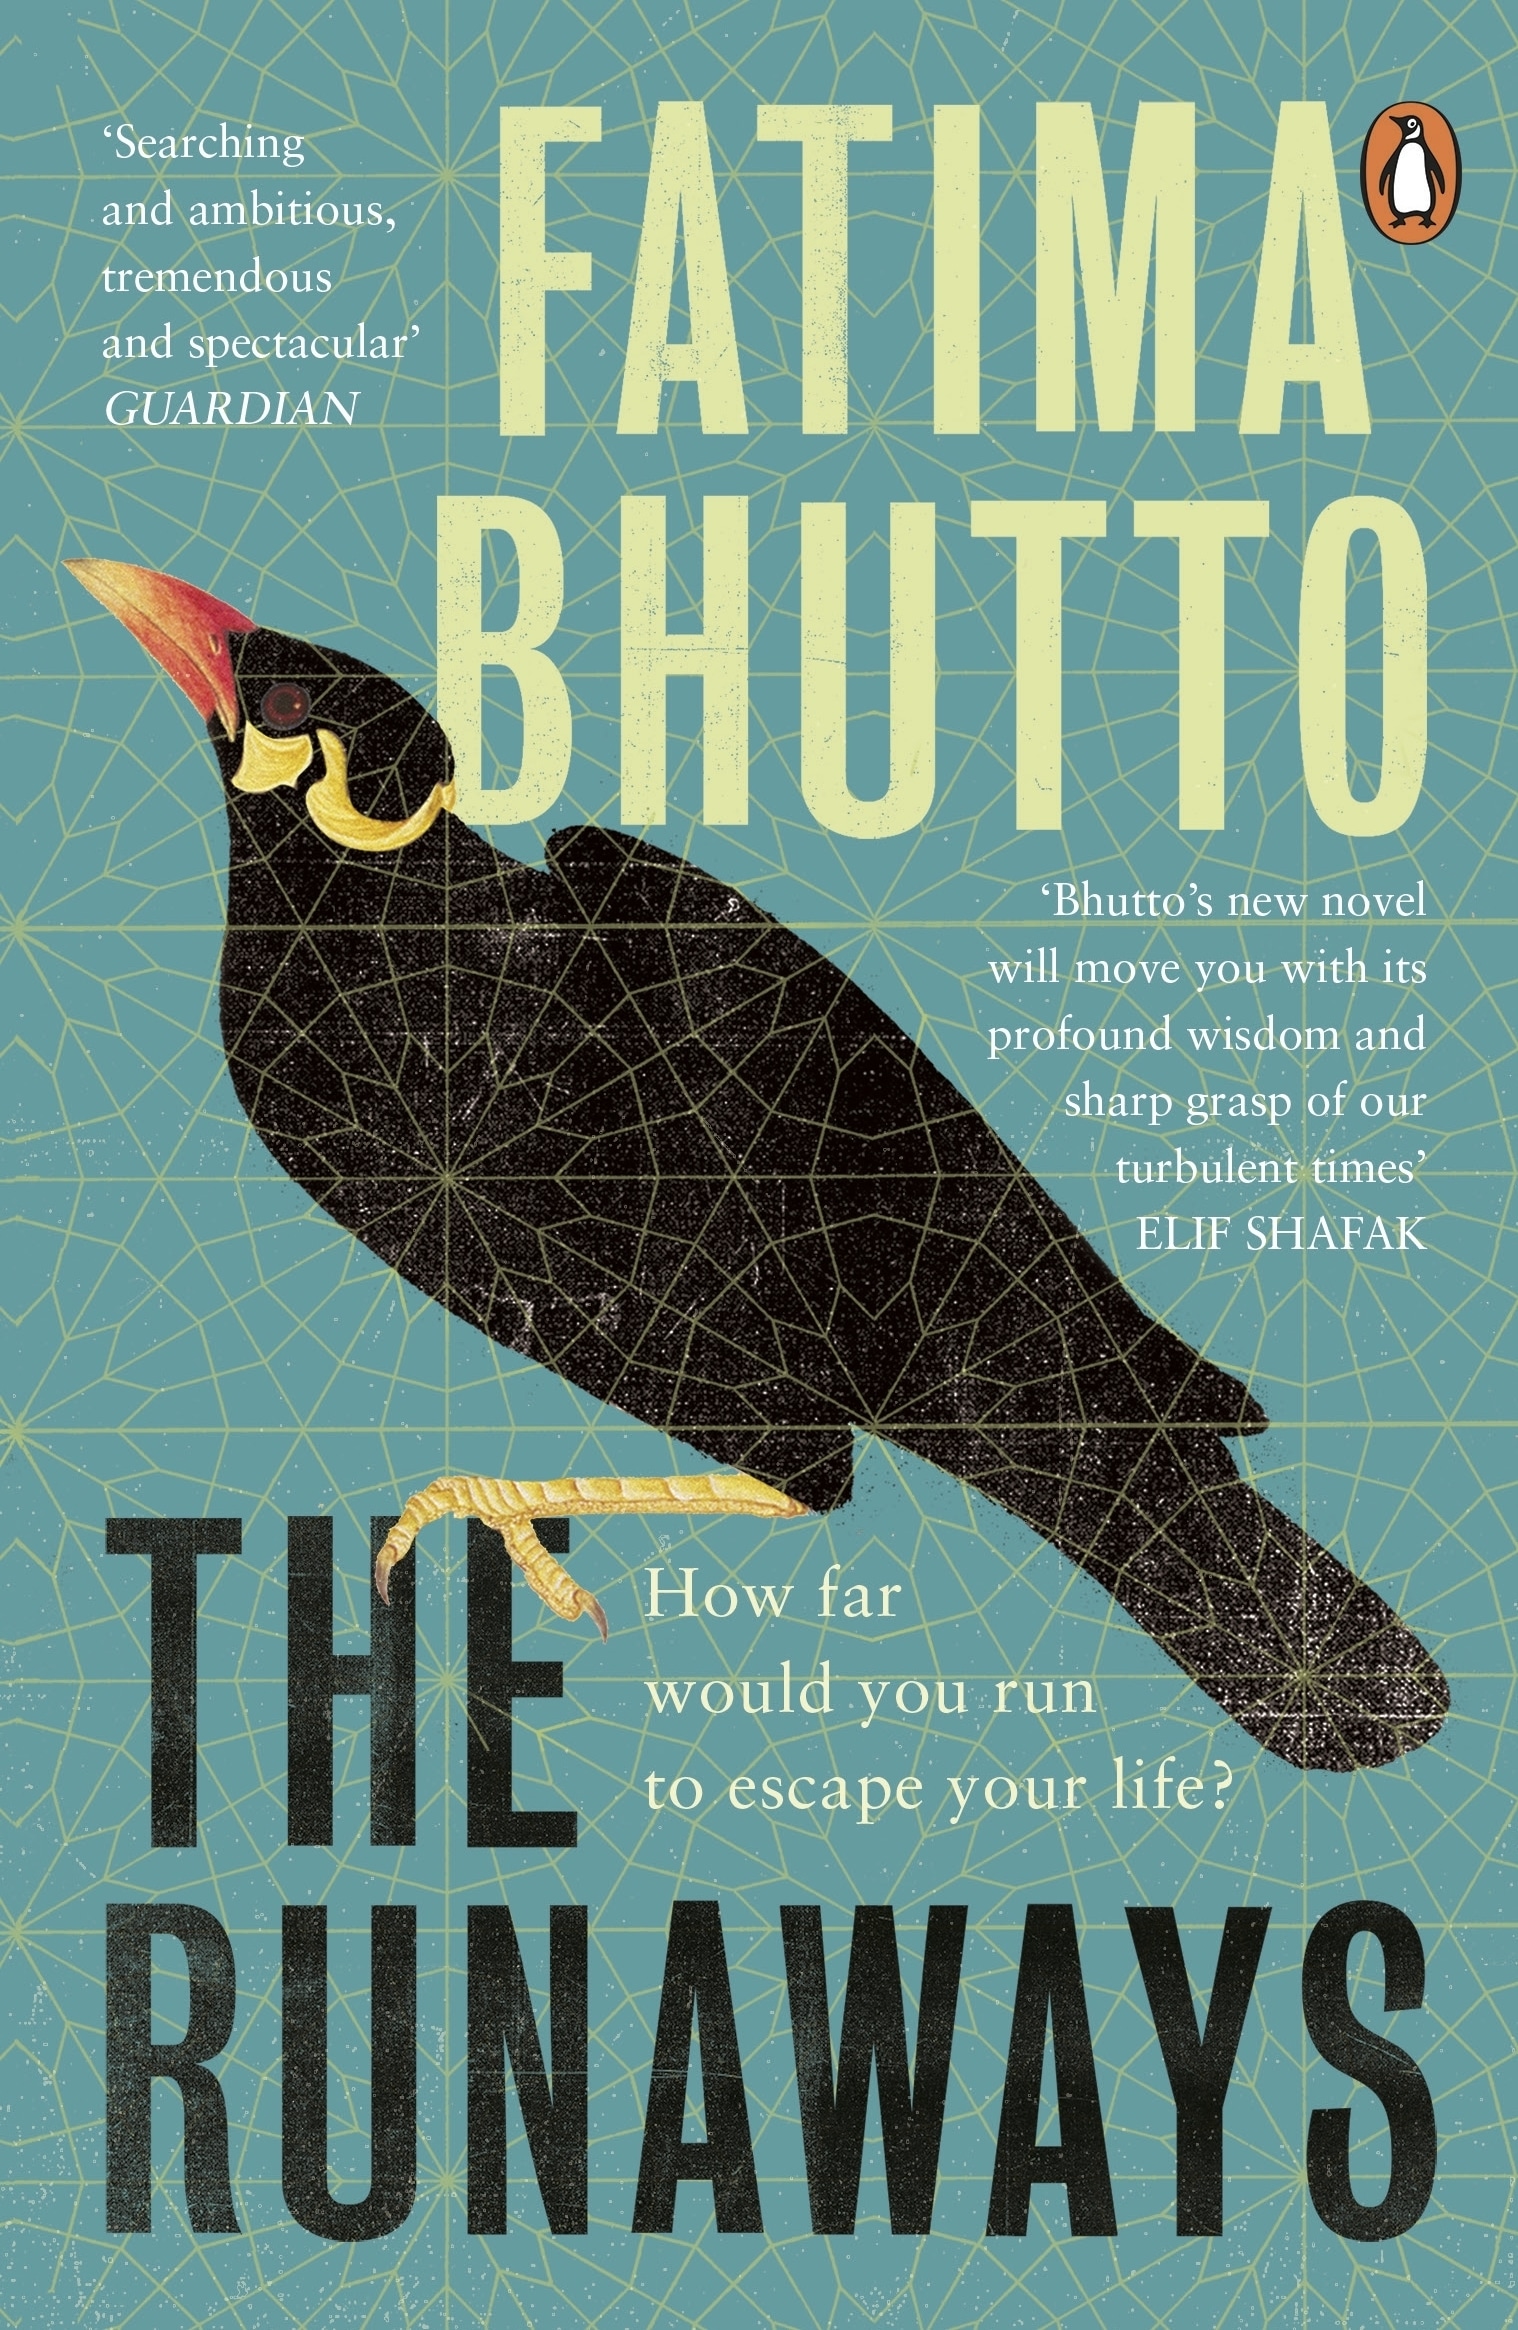 Book “The Runaways” by Fatima Bhutto — March 19, 2020